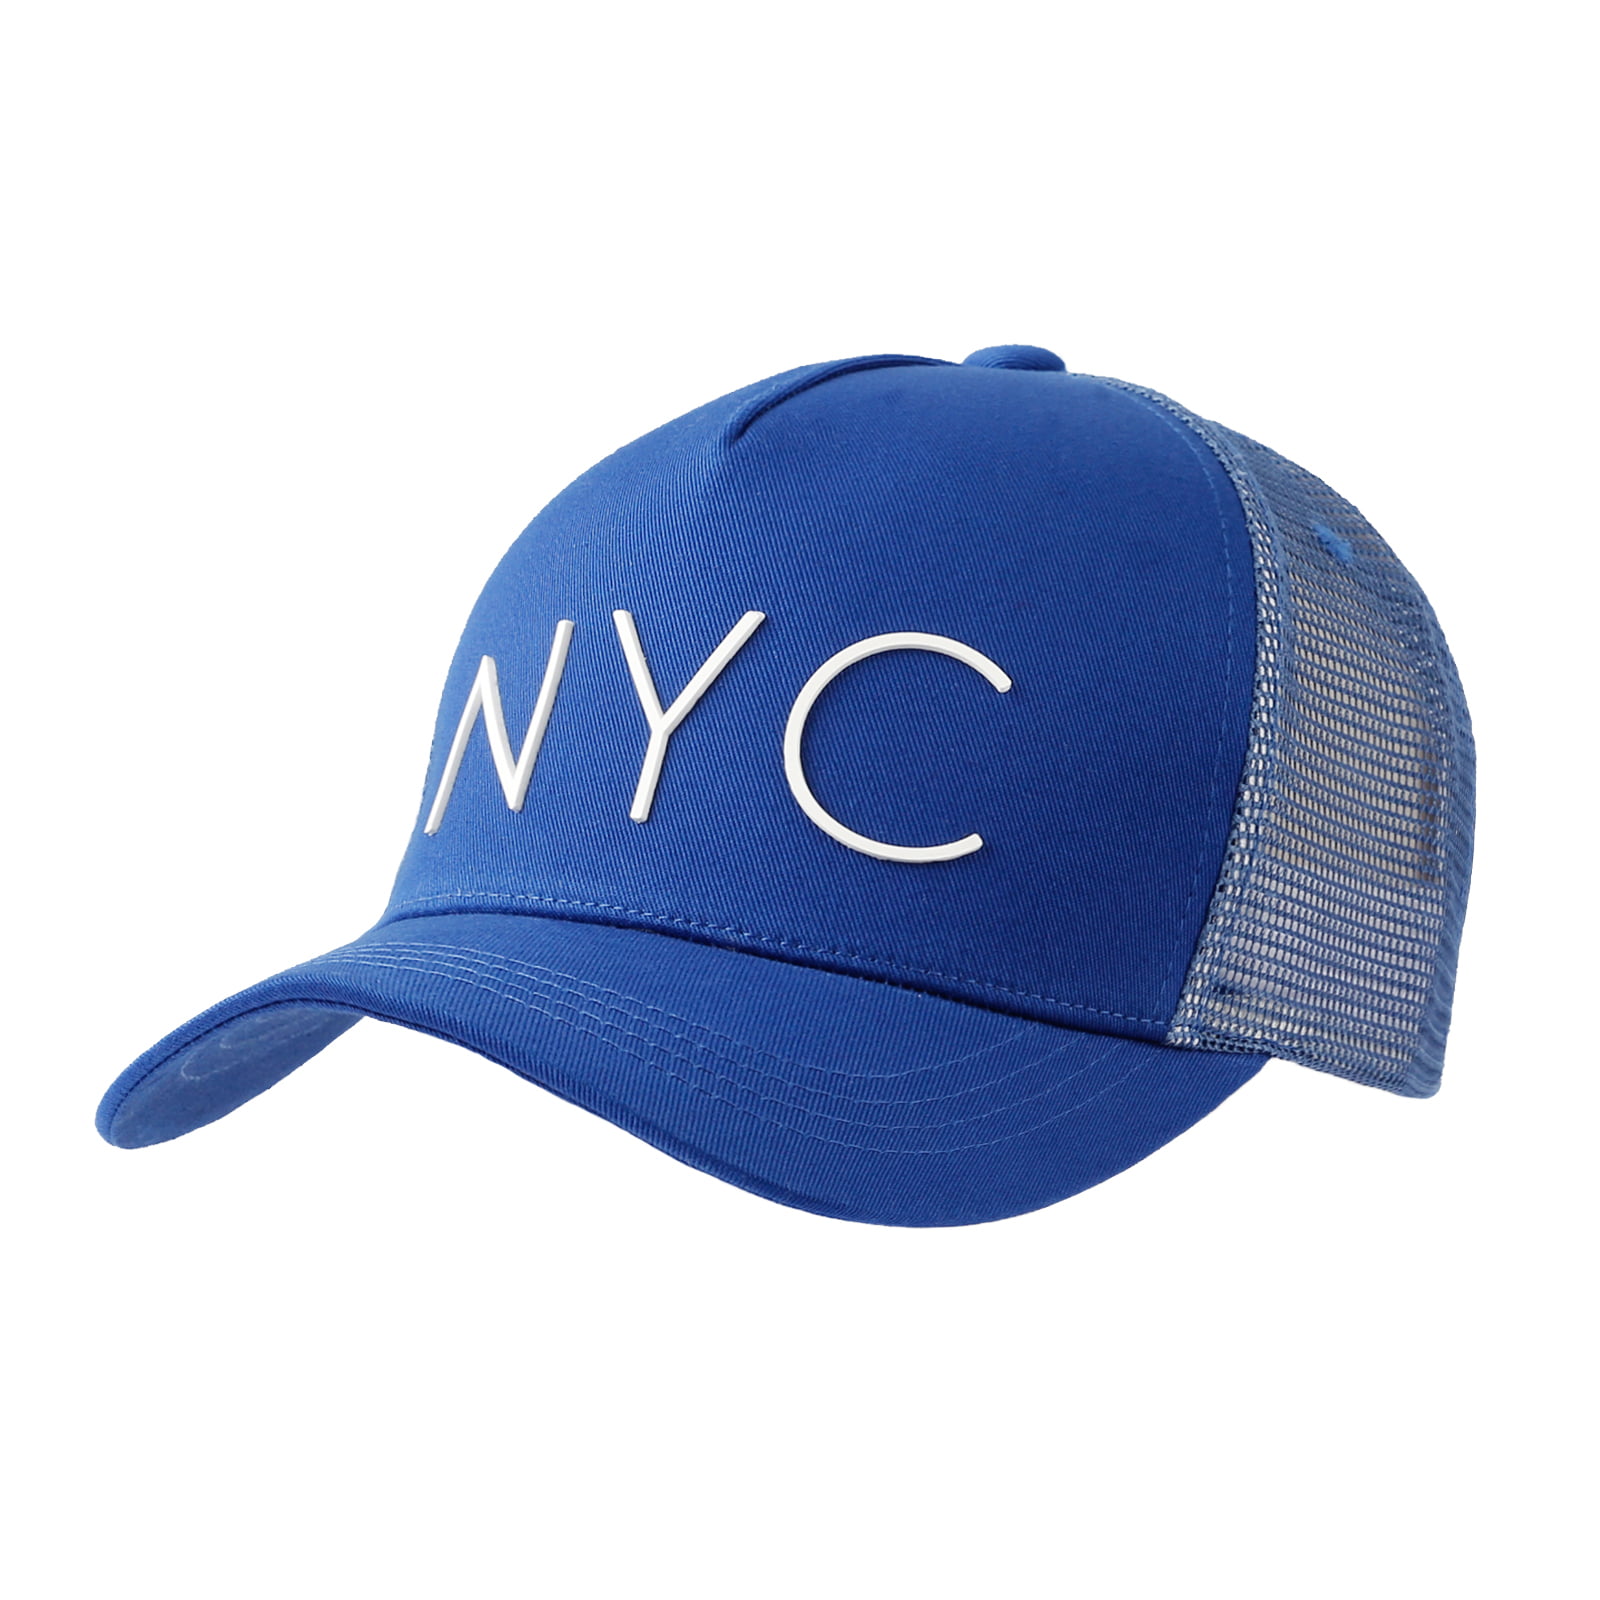 NY Unisex New York Adjustable Baseball Snapback Hat Summer Holiday Travel Cap